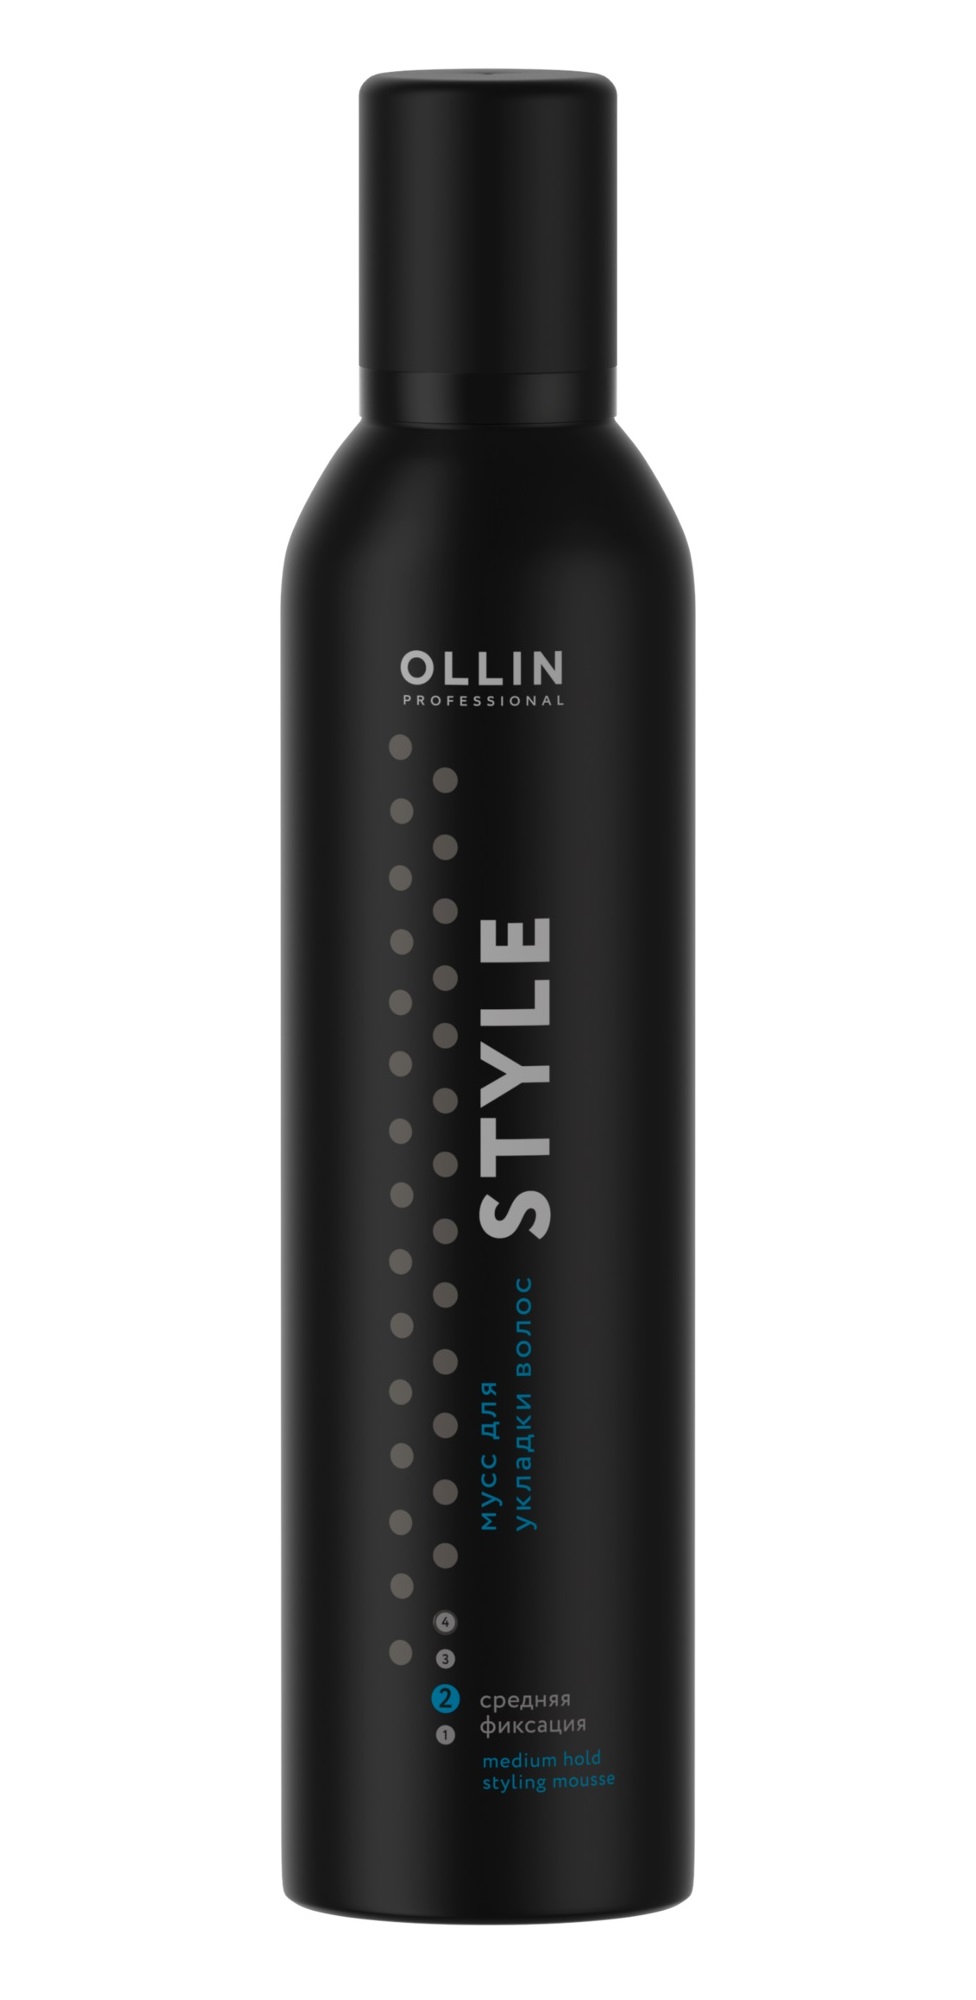 Ollin Professional Мусс для укладки волос средней фиксации, 250 мл (Ollin Professional, Style) мусс для укладки волос средней фиксации style 250 мл